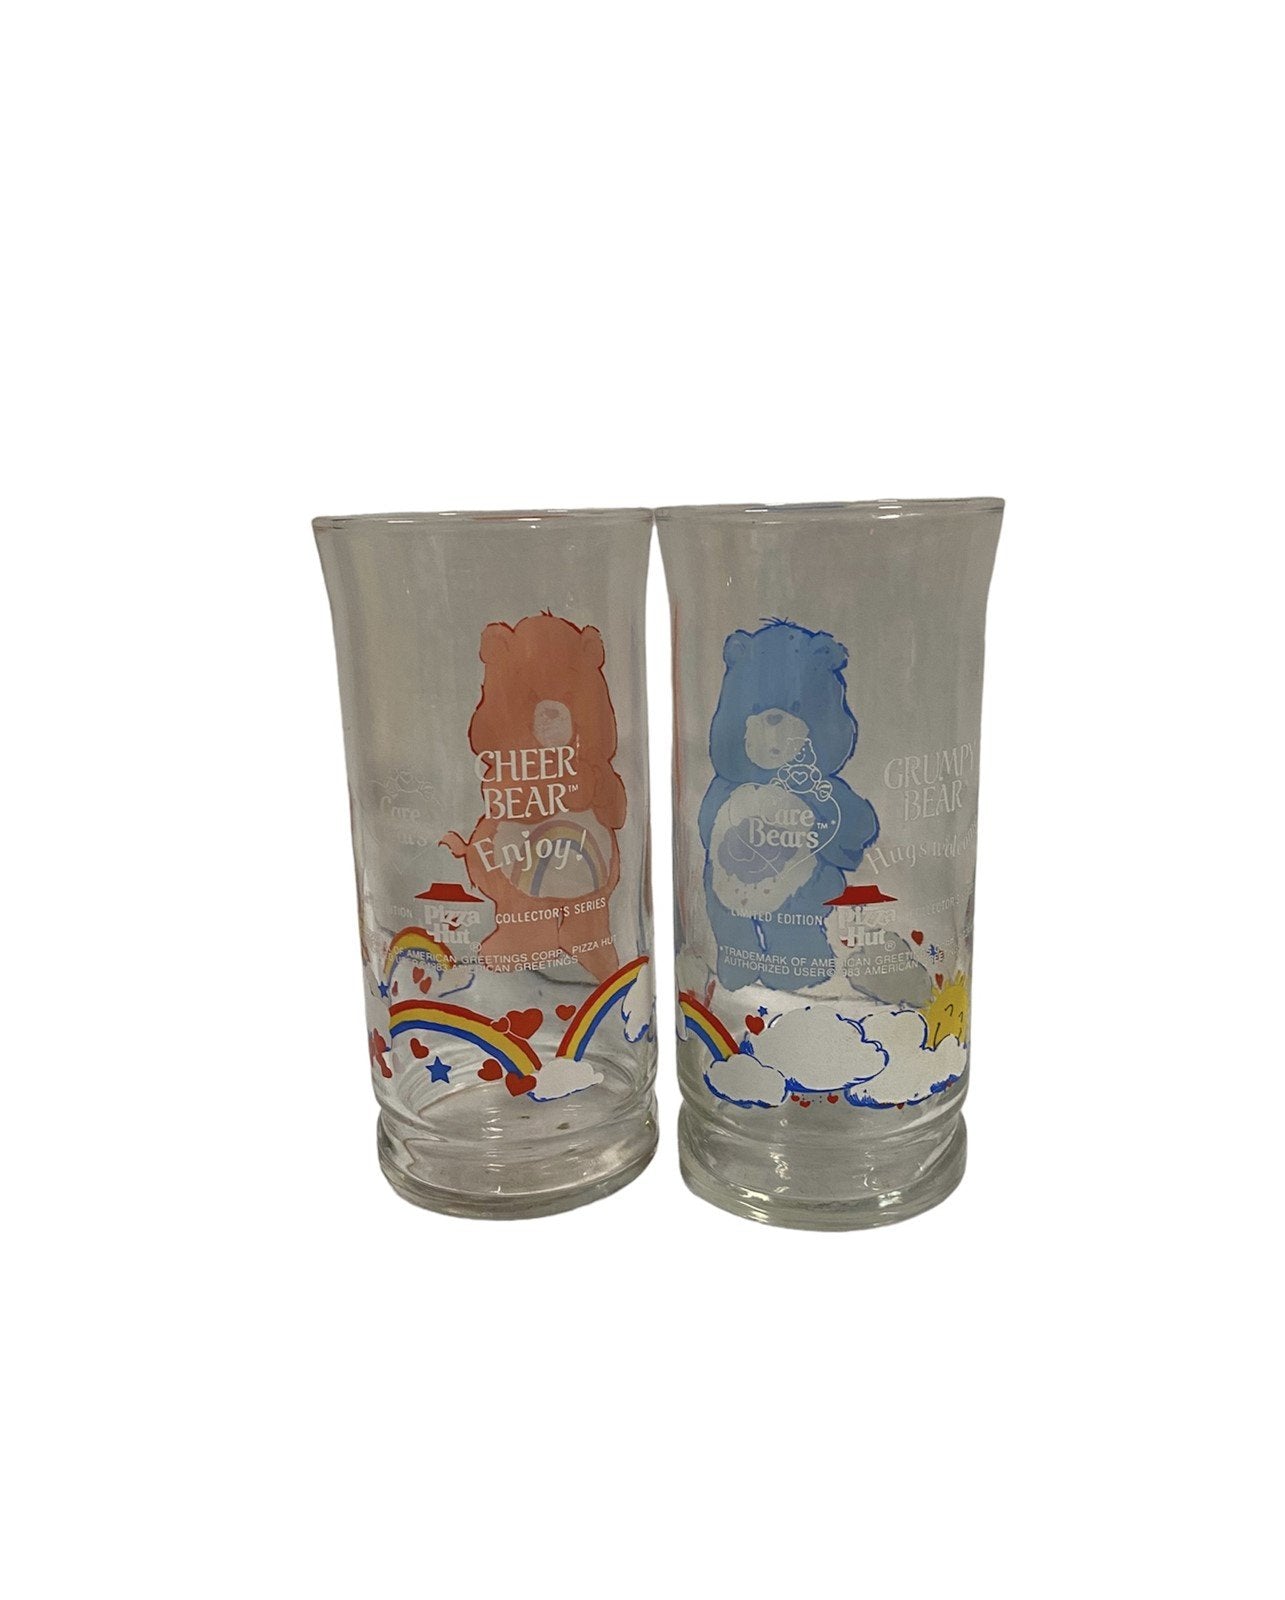 Care Bares Glass Cups Set of 2 Pizza Hut 1983 Souvenir Collection